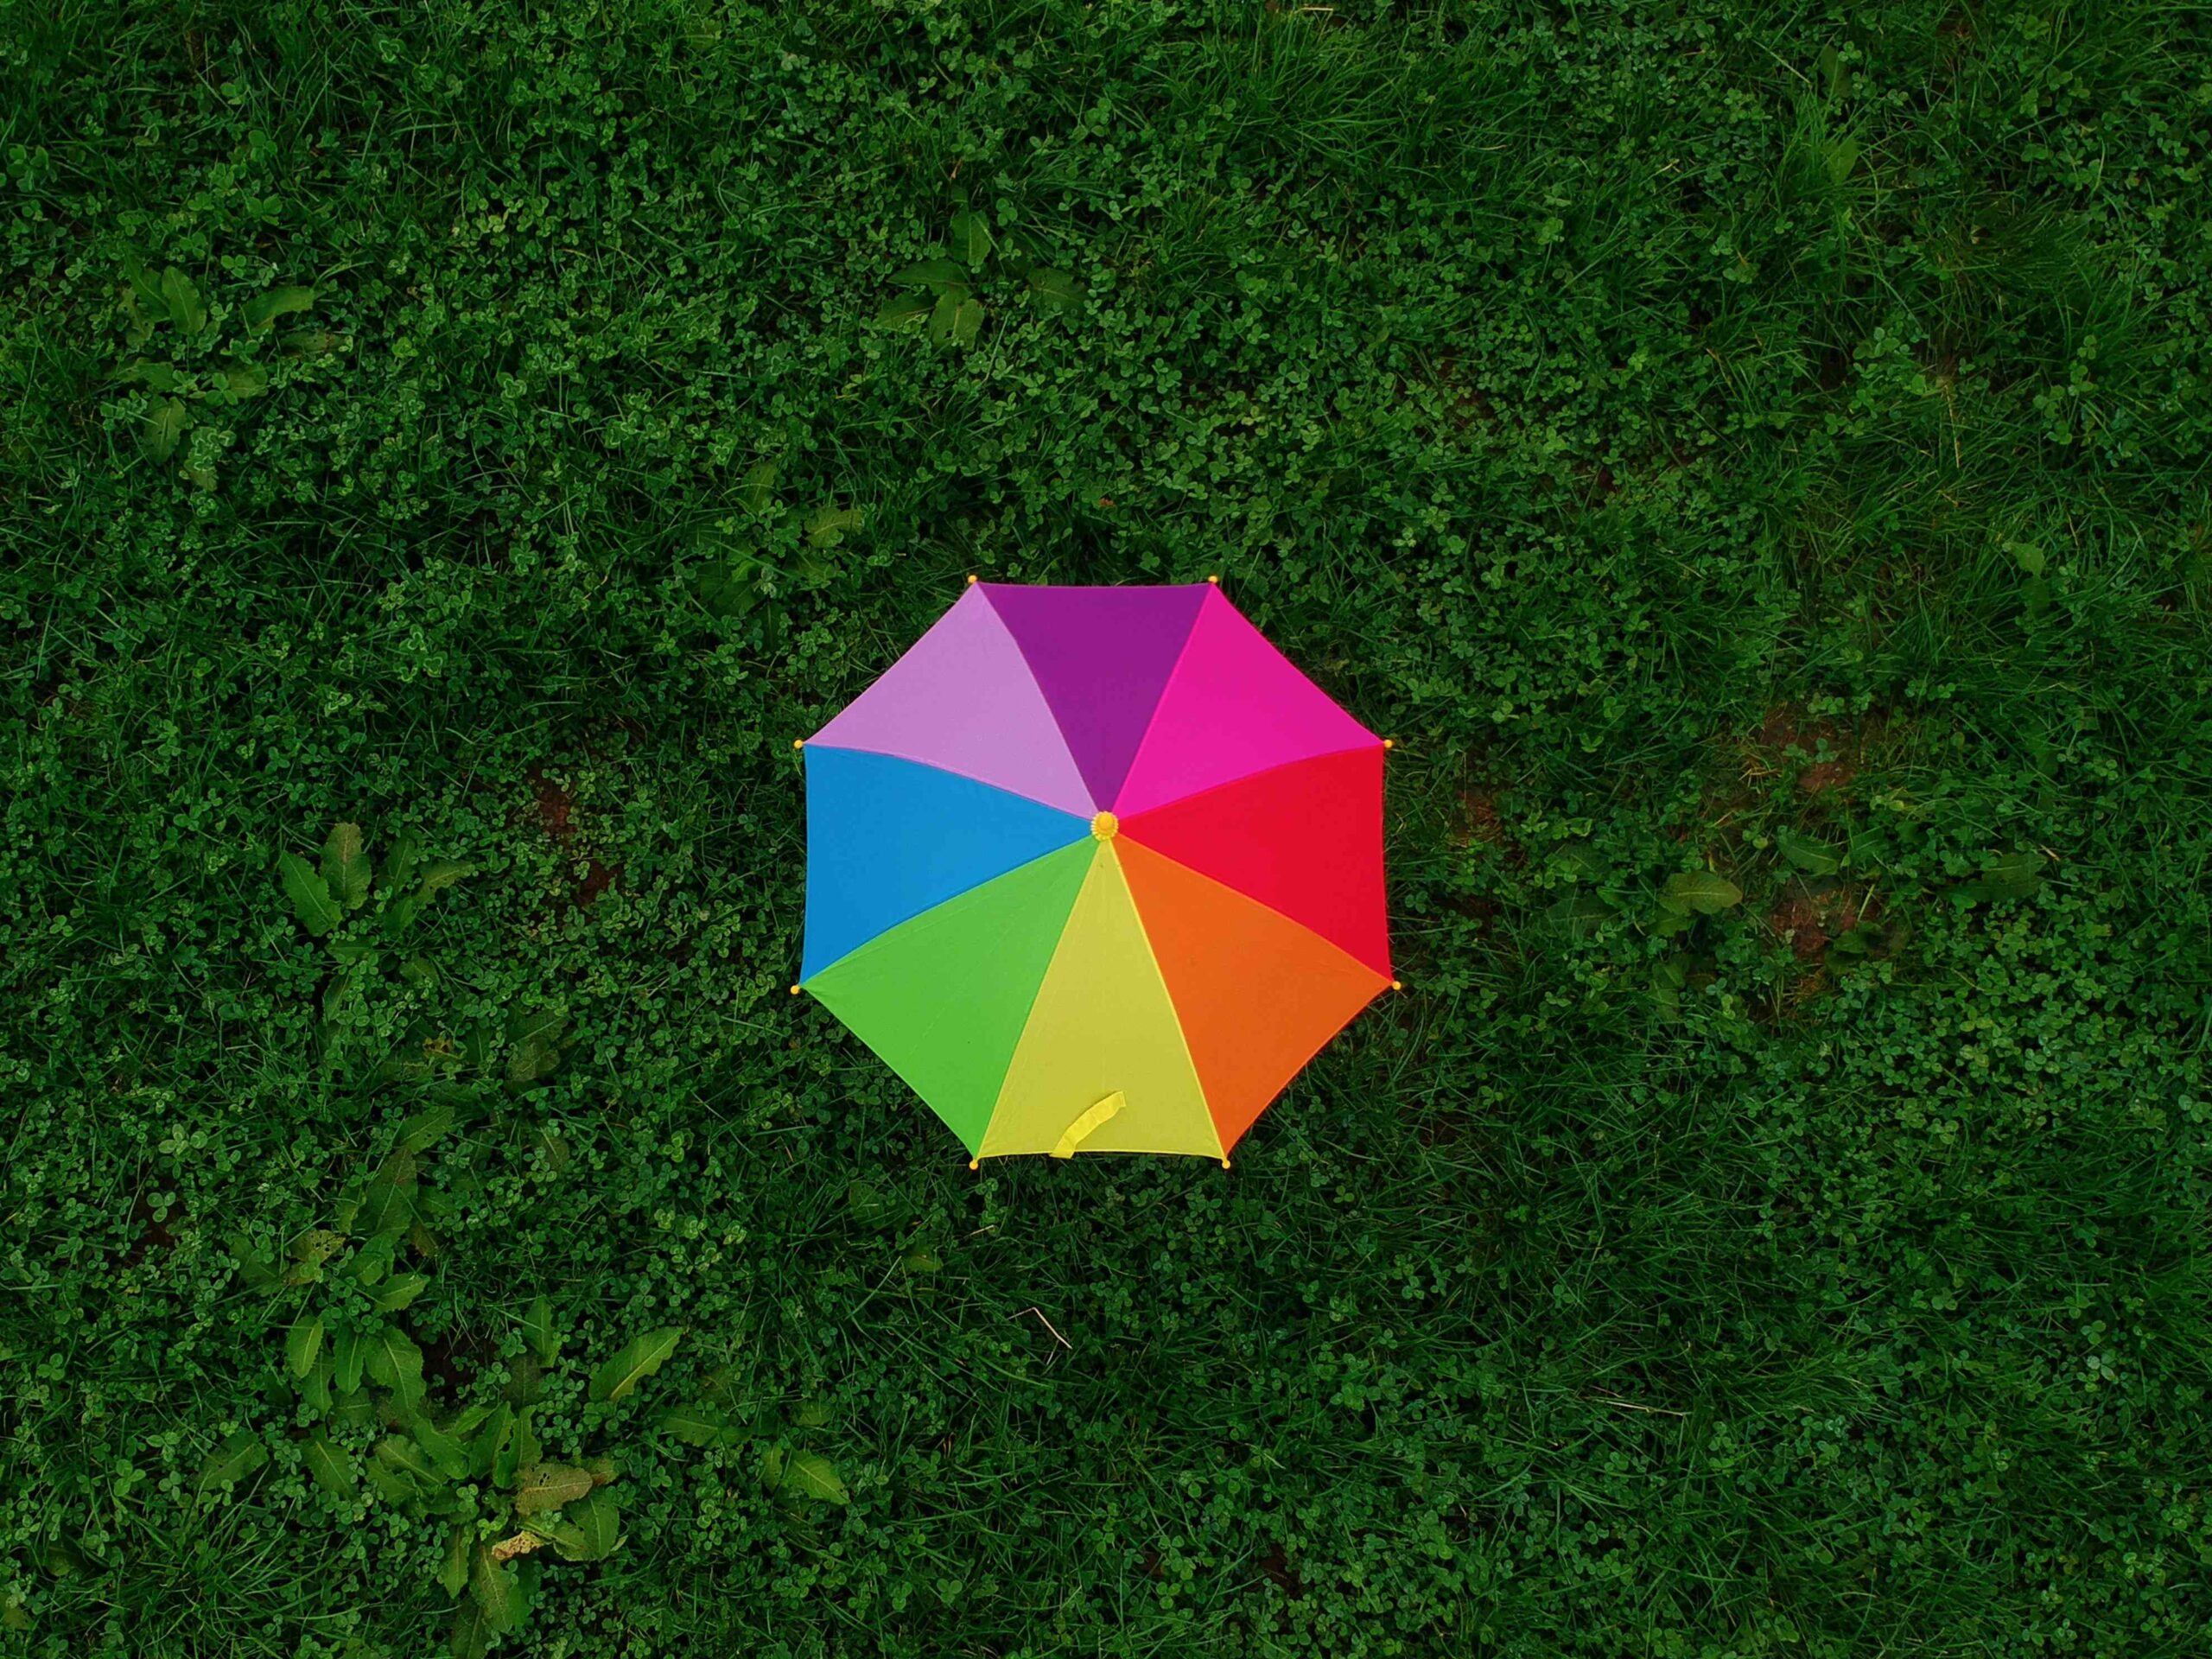 colourful umbrella